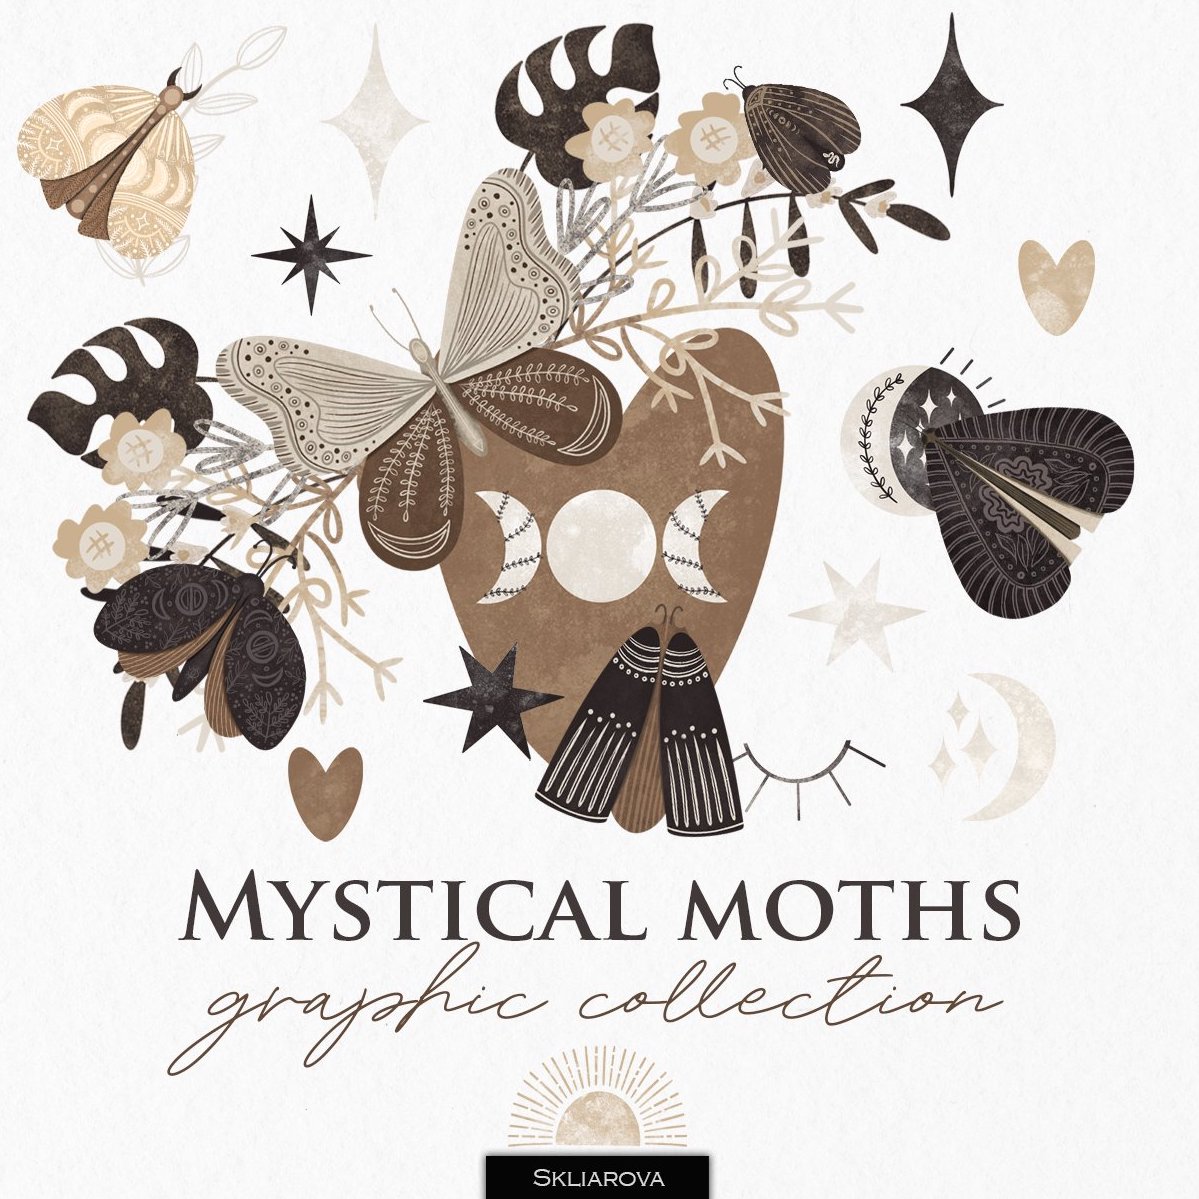 Mystical Moths cover image